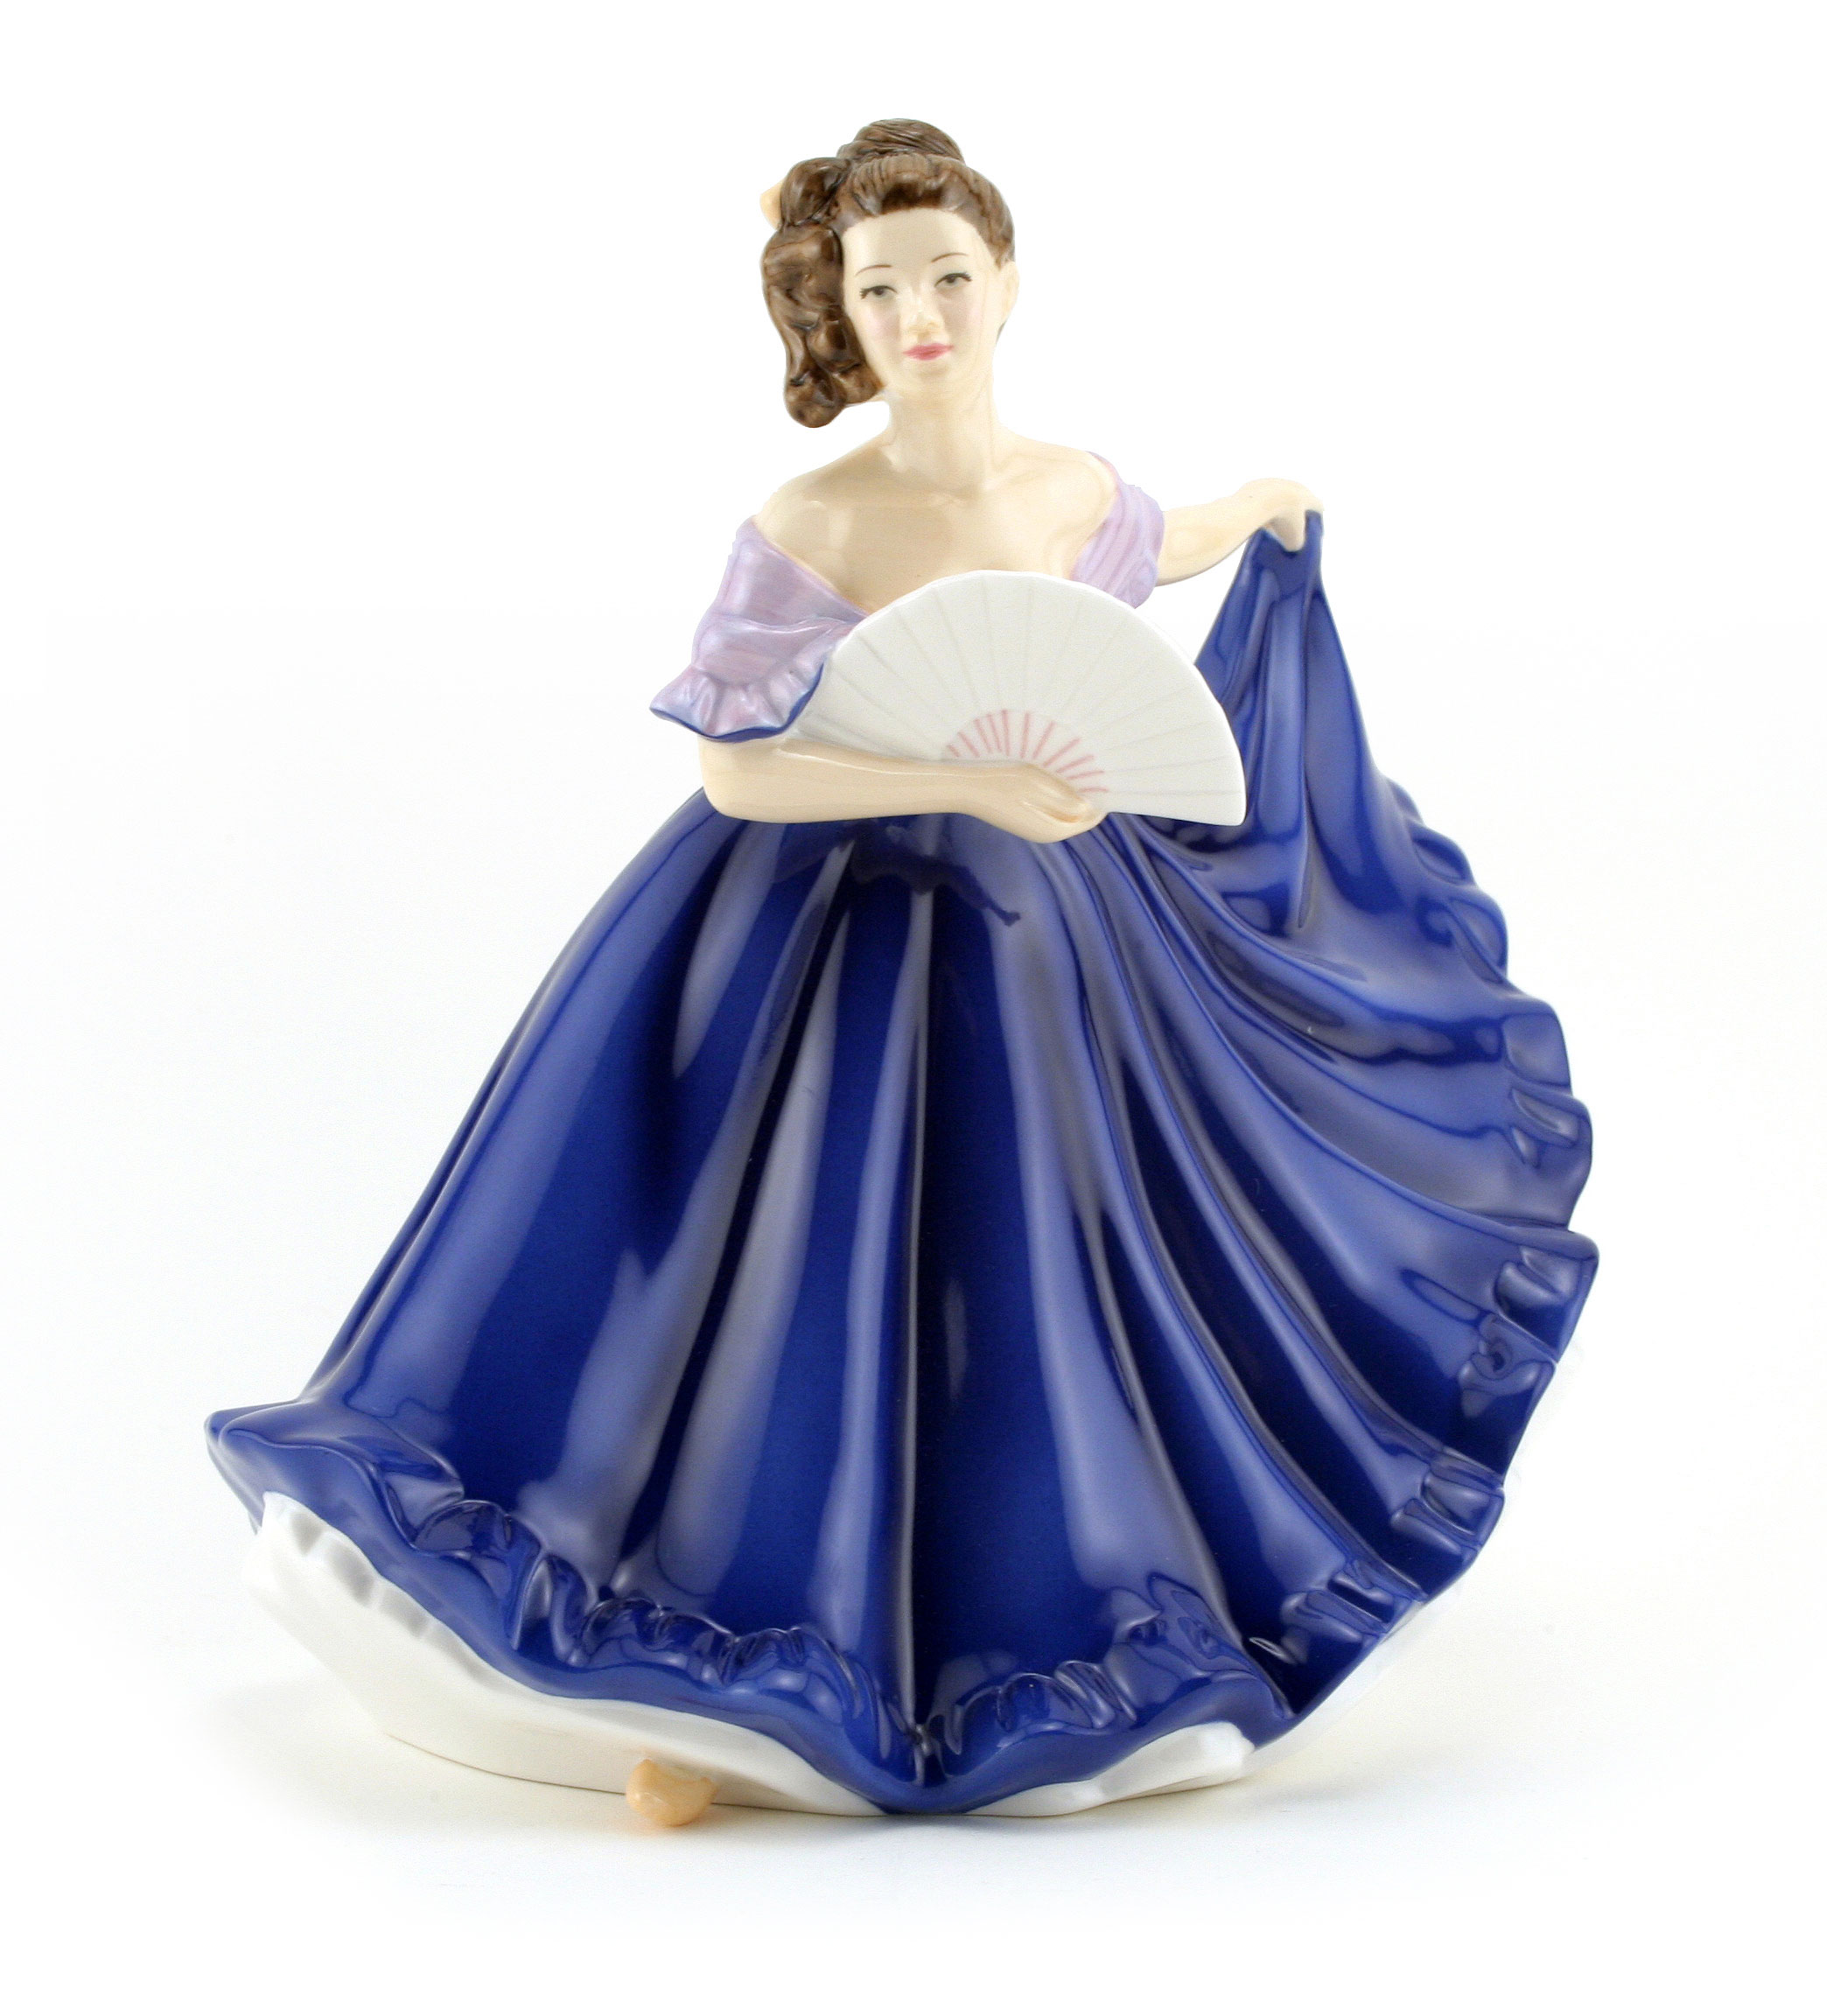 Elaine HN4718 - Royal Doulton Figurine